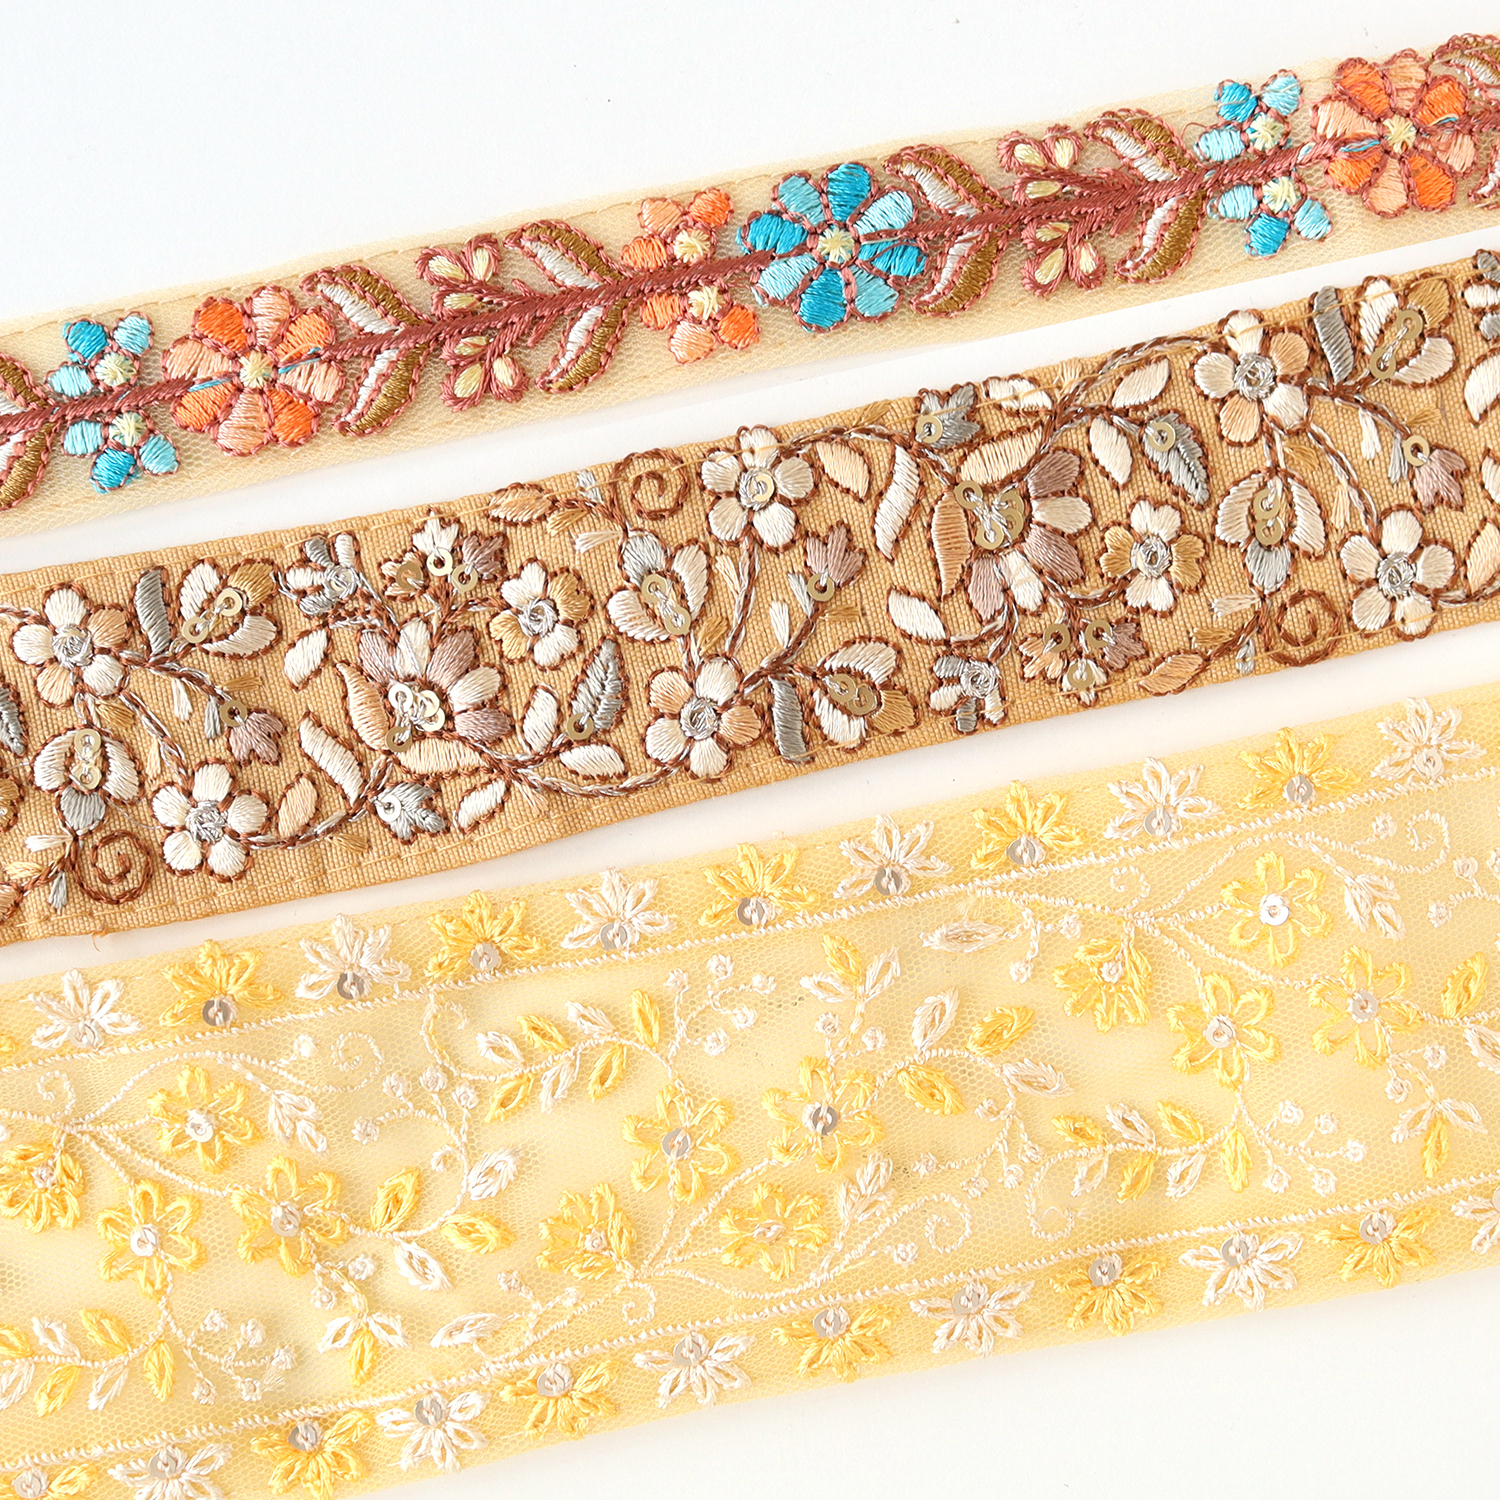 KF-RMIX-77 Indian embroidery ribbon", approx. 30cm x 3pcs (bag)